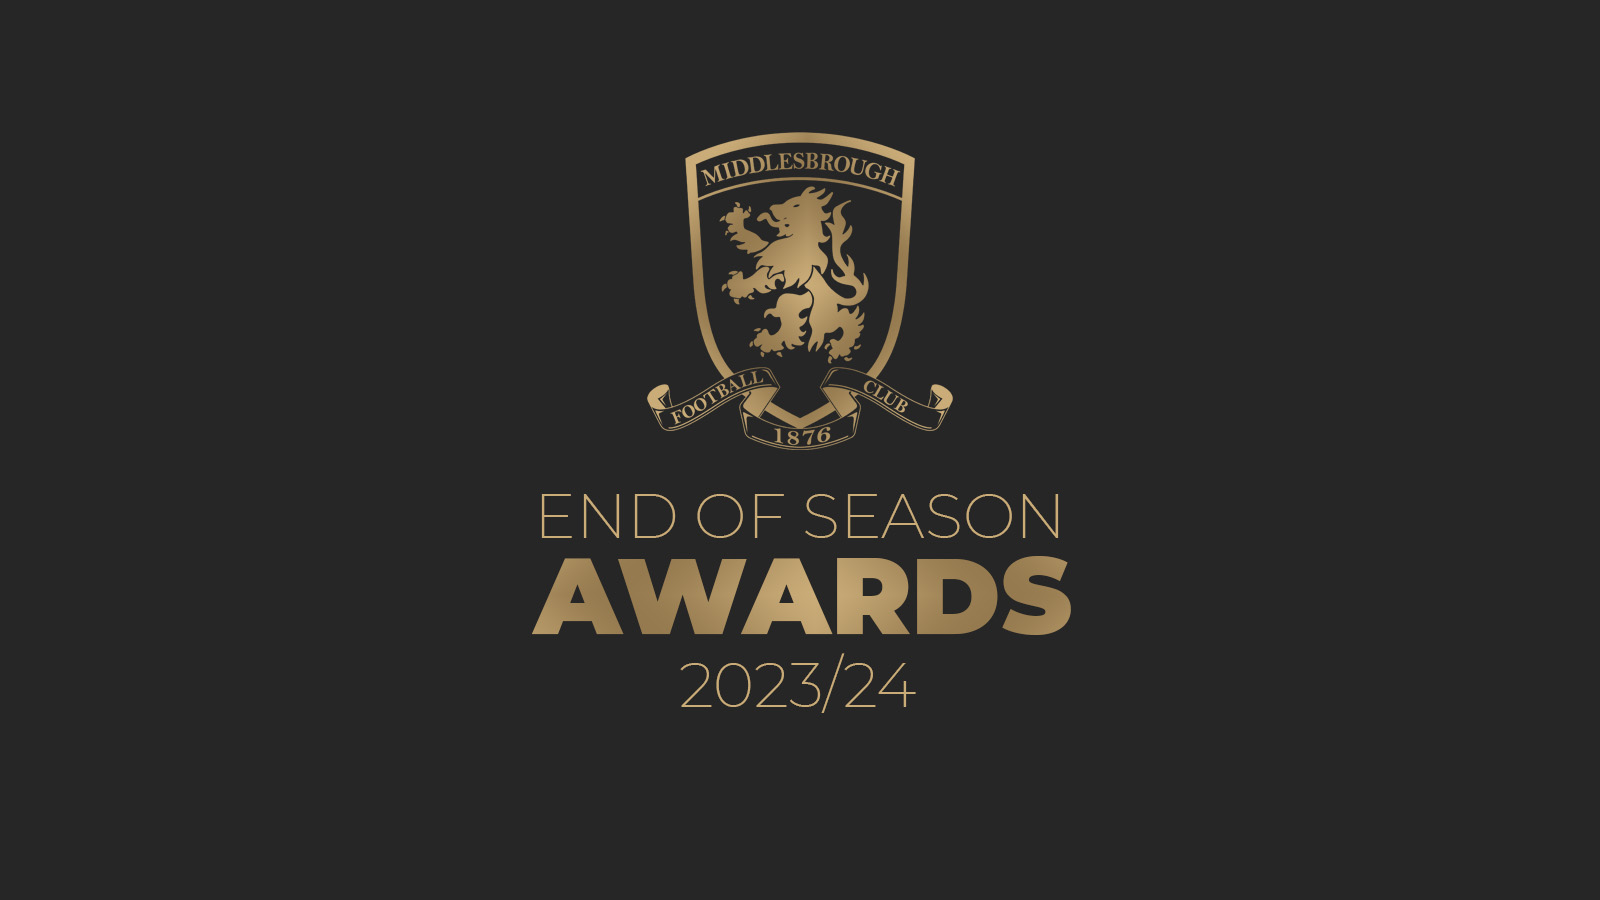  Middlesbrough FC – End Of Season Awards 2023/24